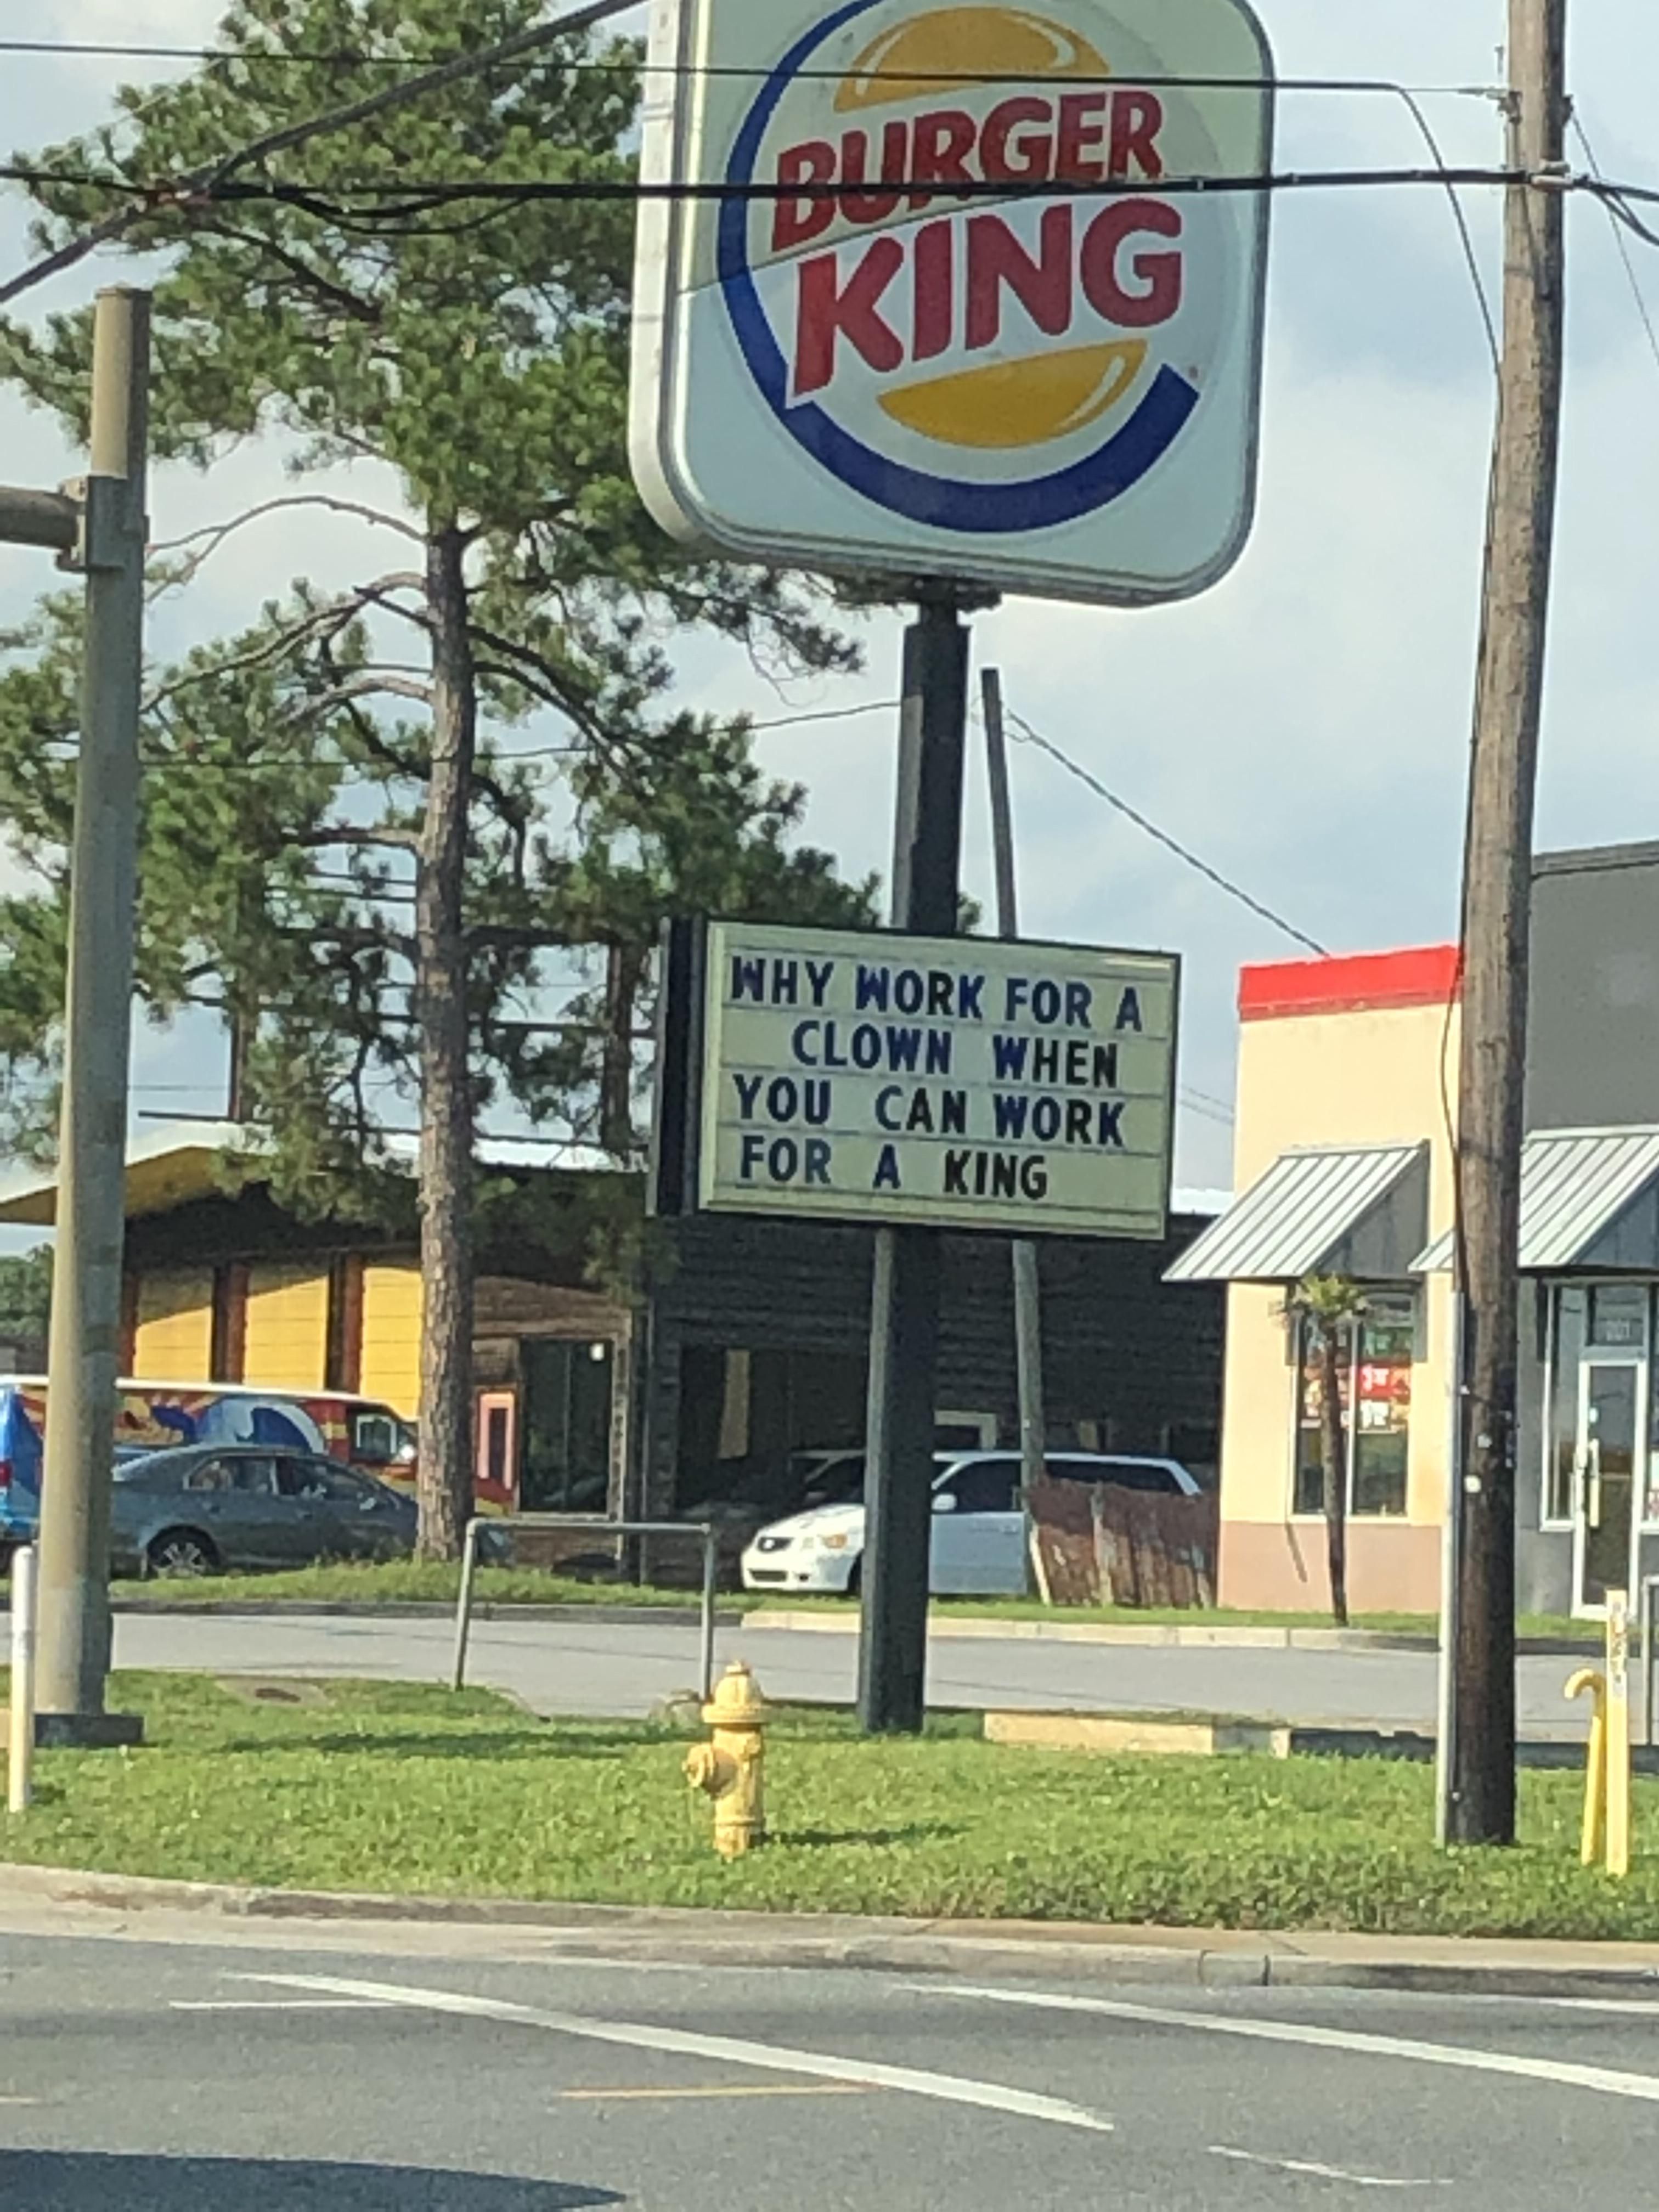 Burger King, throwing shade